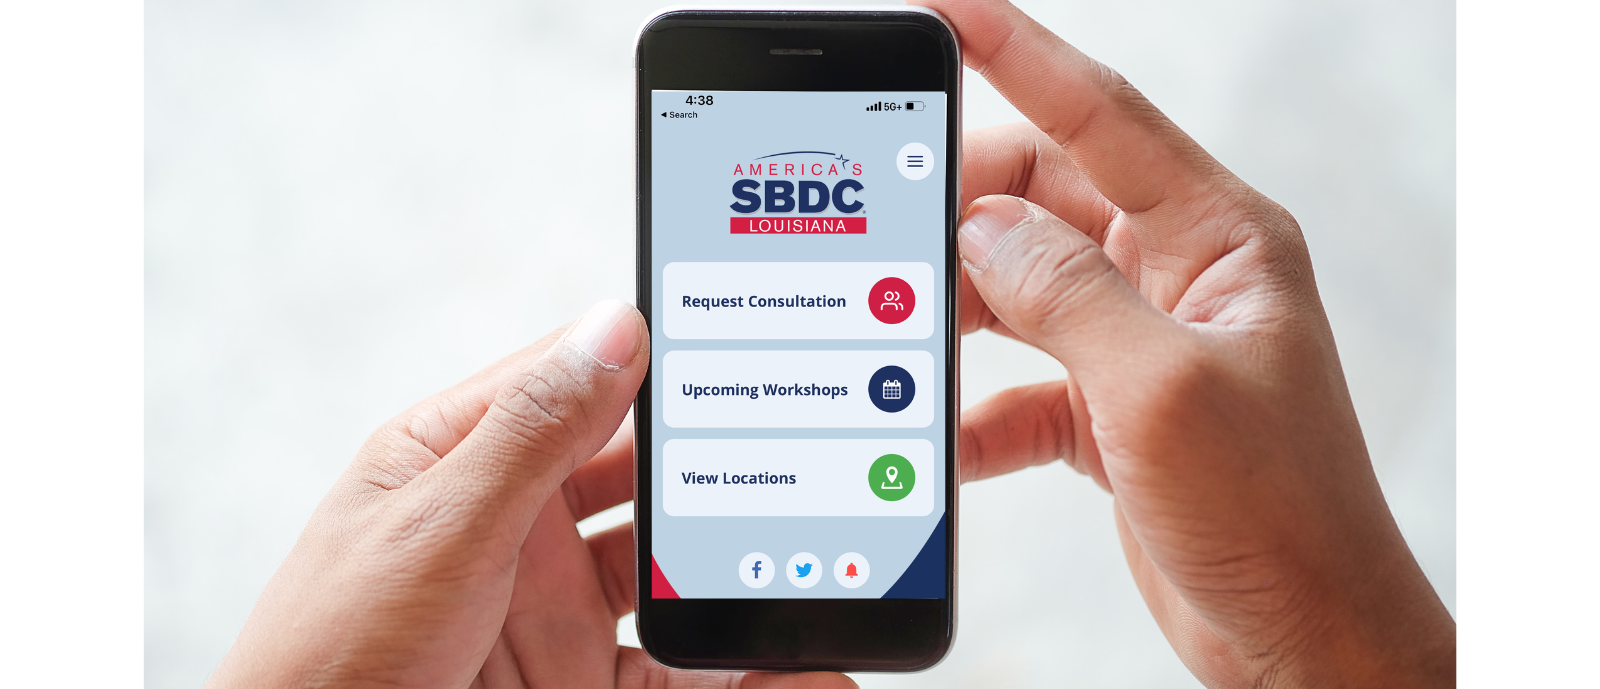 LSBDC Mobile App Image